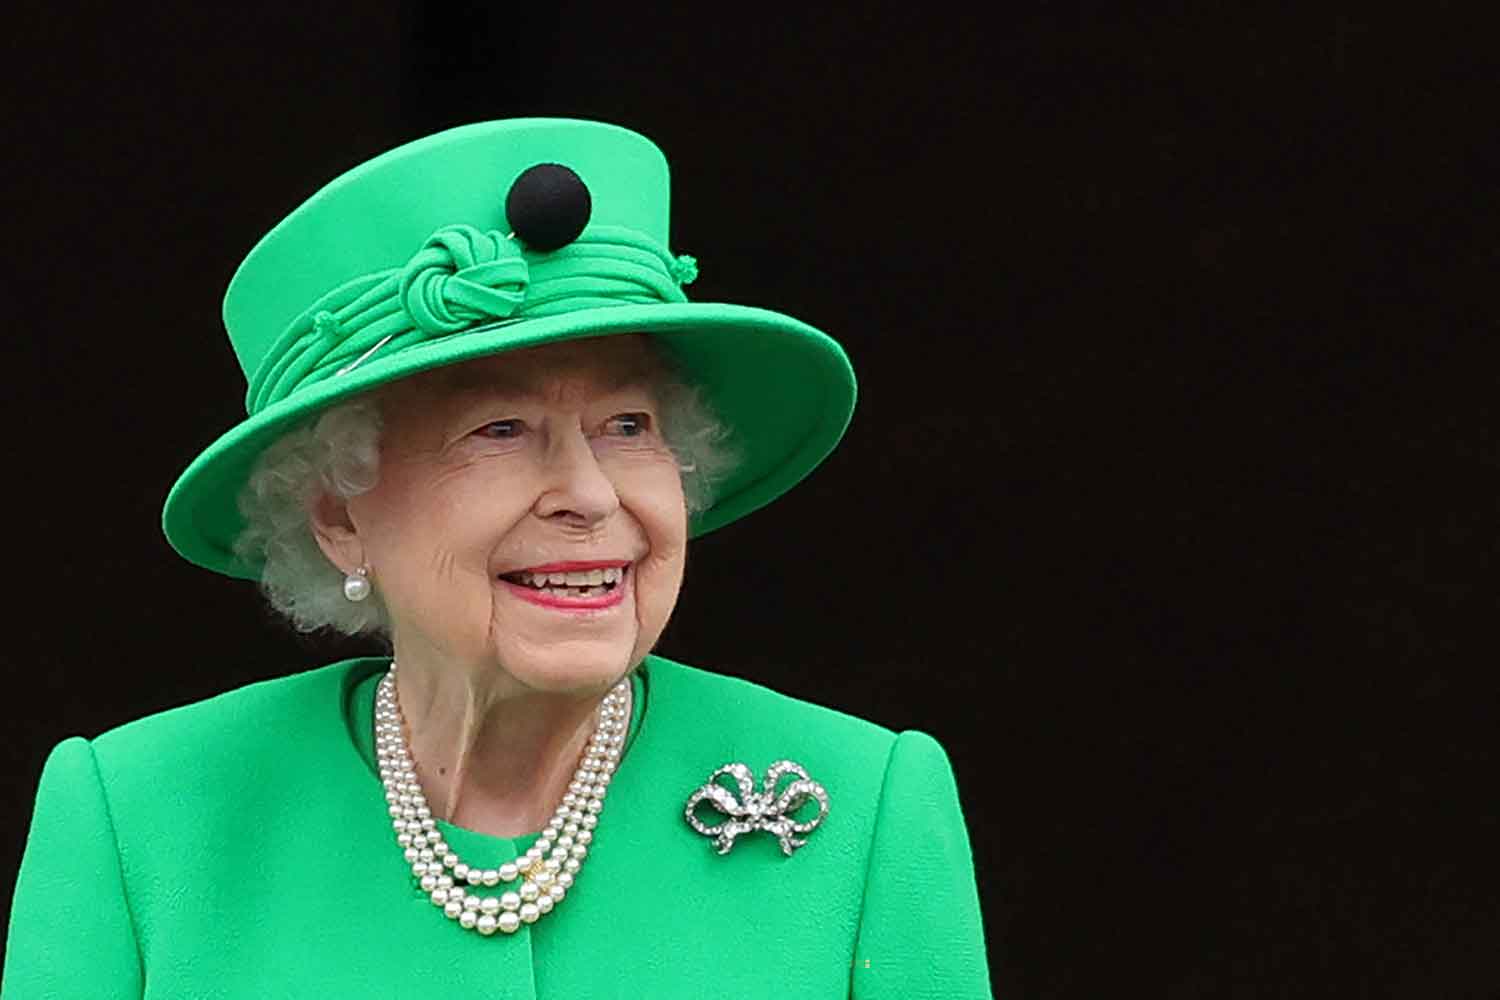 Closeup of Queen Elizabeth smiling in green hat and jacket